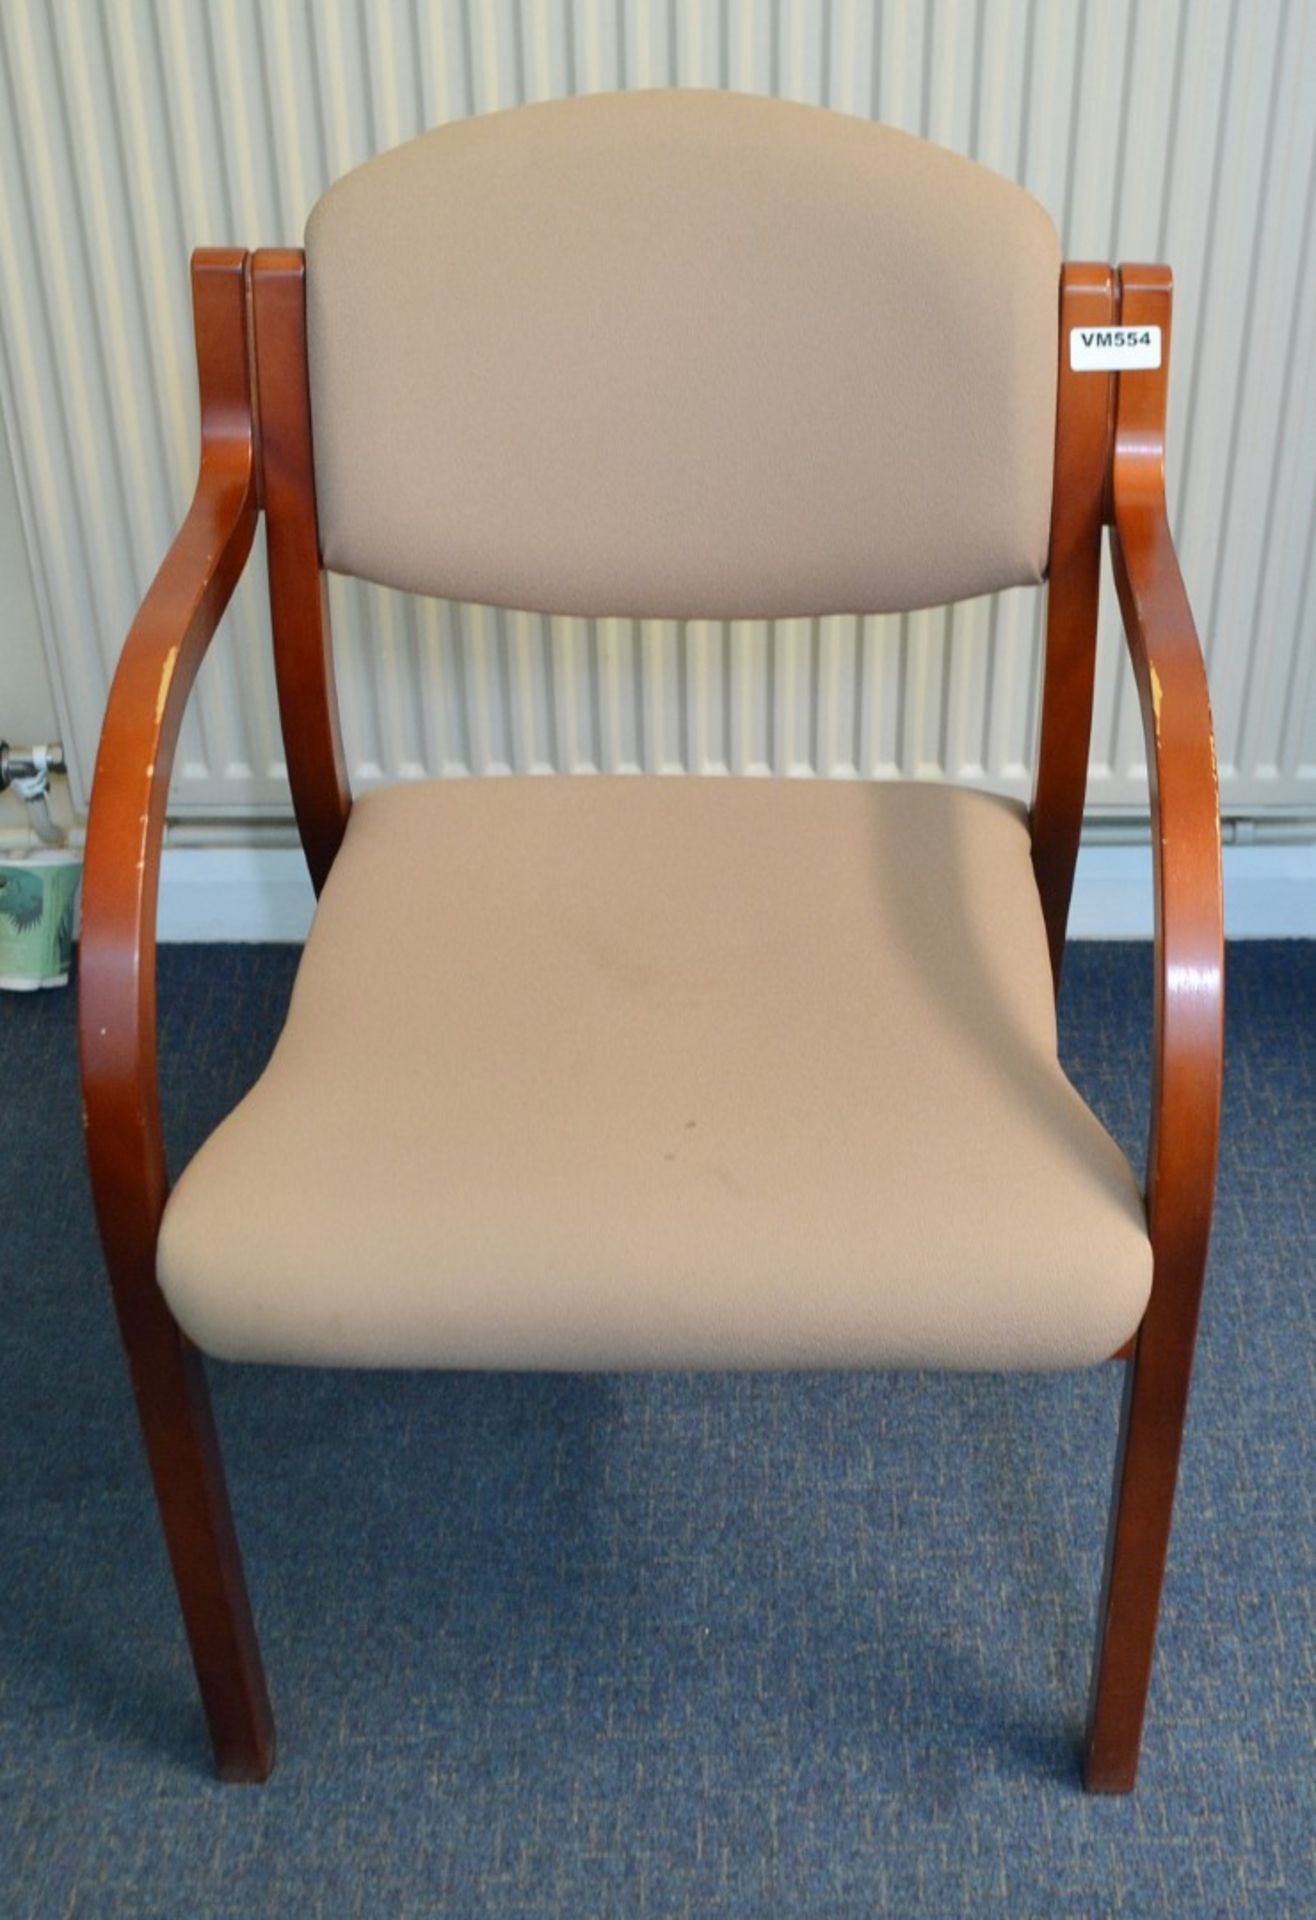 4 x Beige Office Boardroom Chairs - Ref: VM554 - CL409 - Location: Wakefield WF16